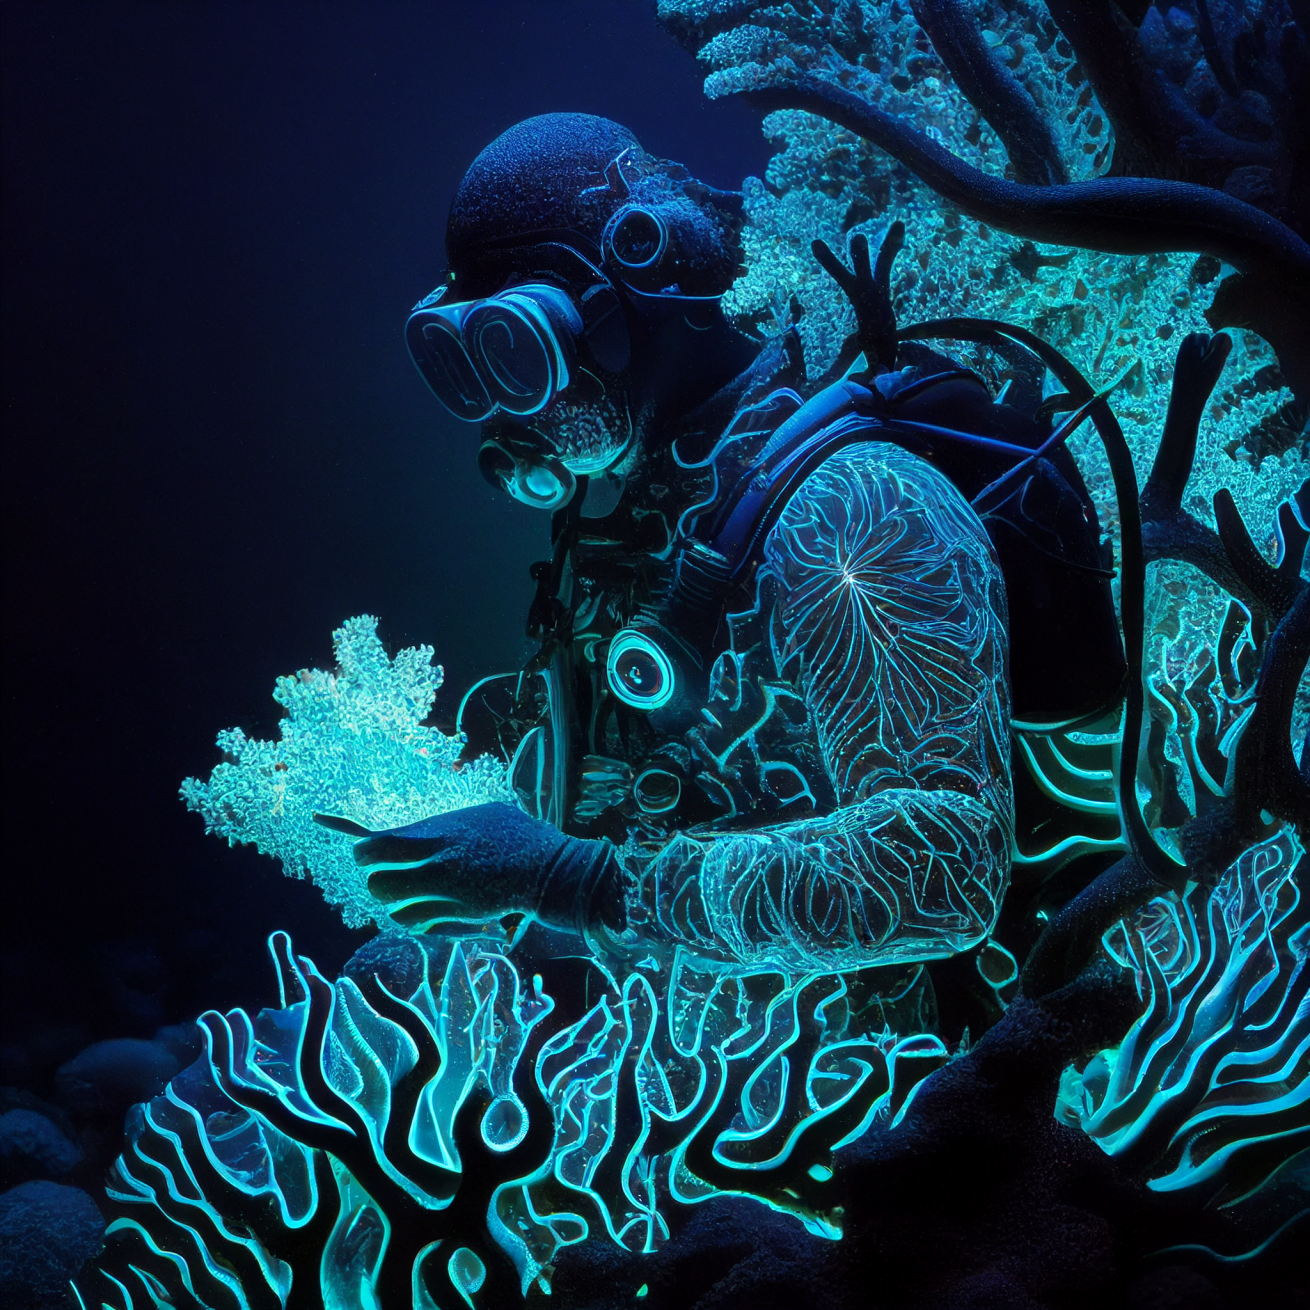 Scuba diver wearing glowsuit